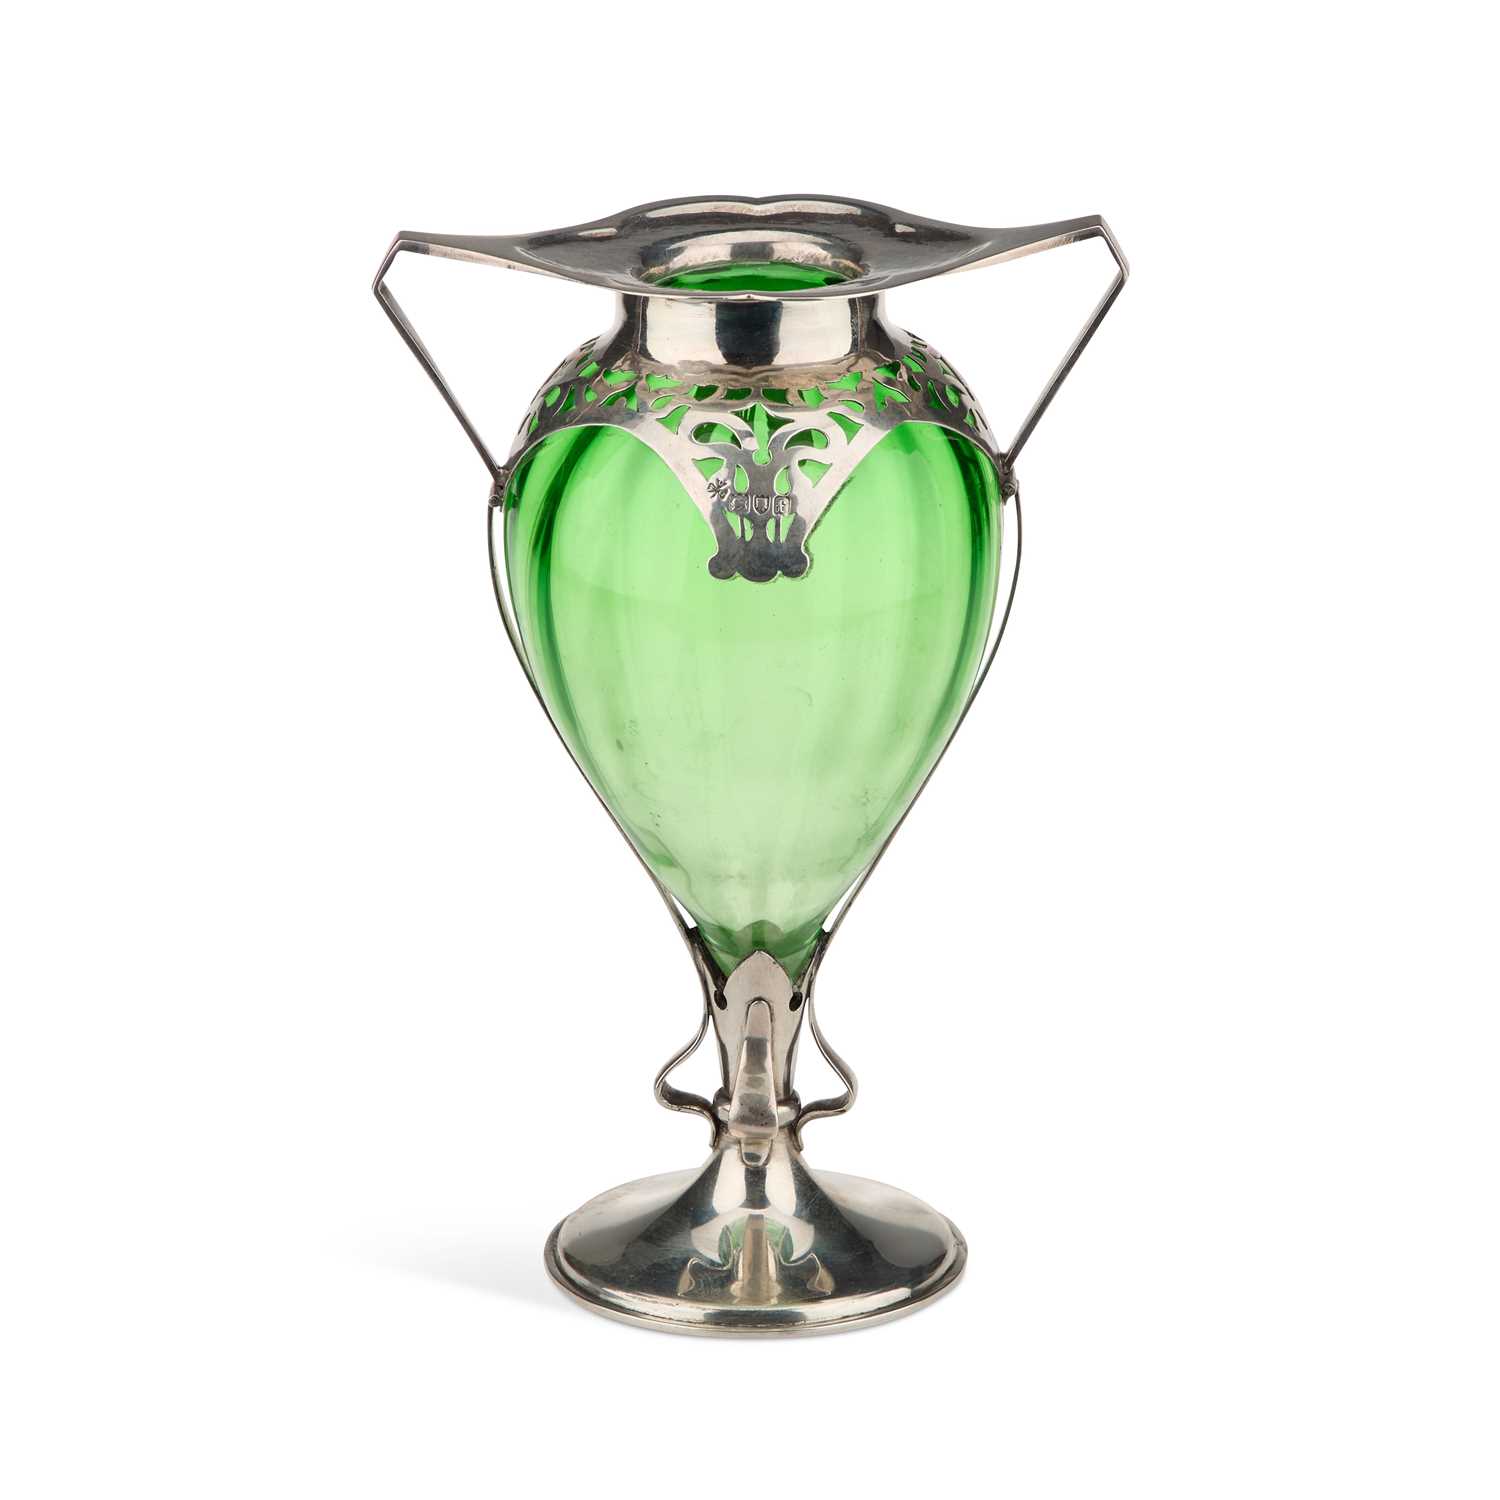 AN EDWARDIAN SILVER-MOUNTED GREEN GLASS VASE